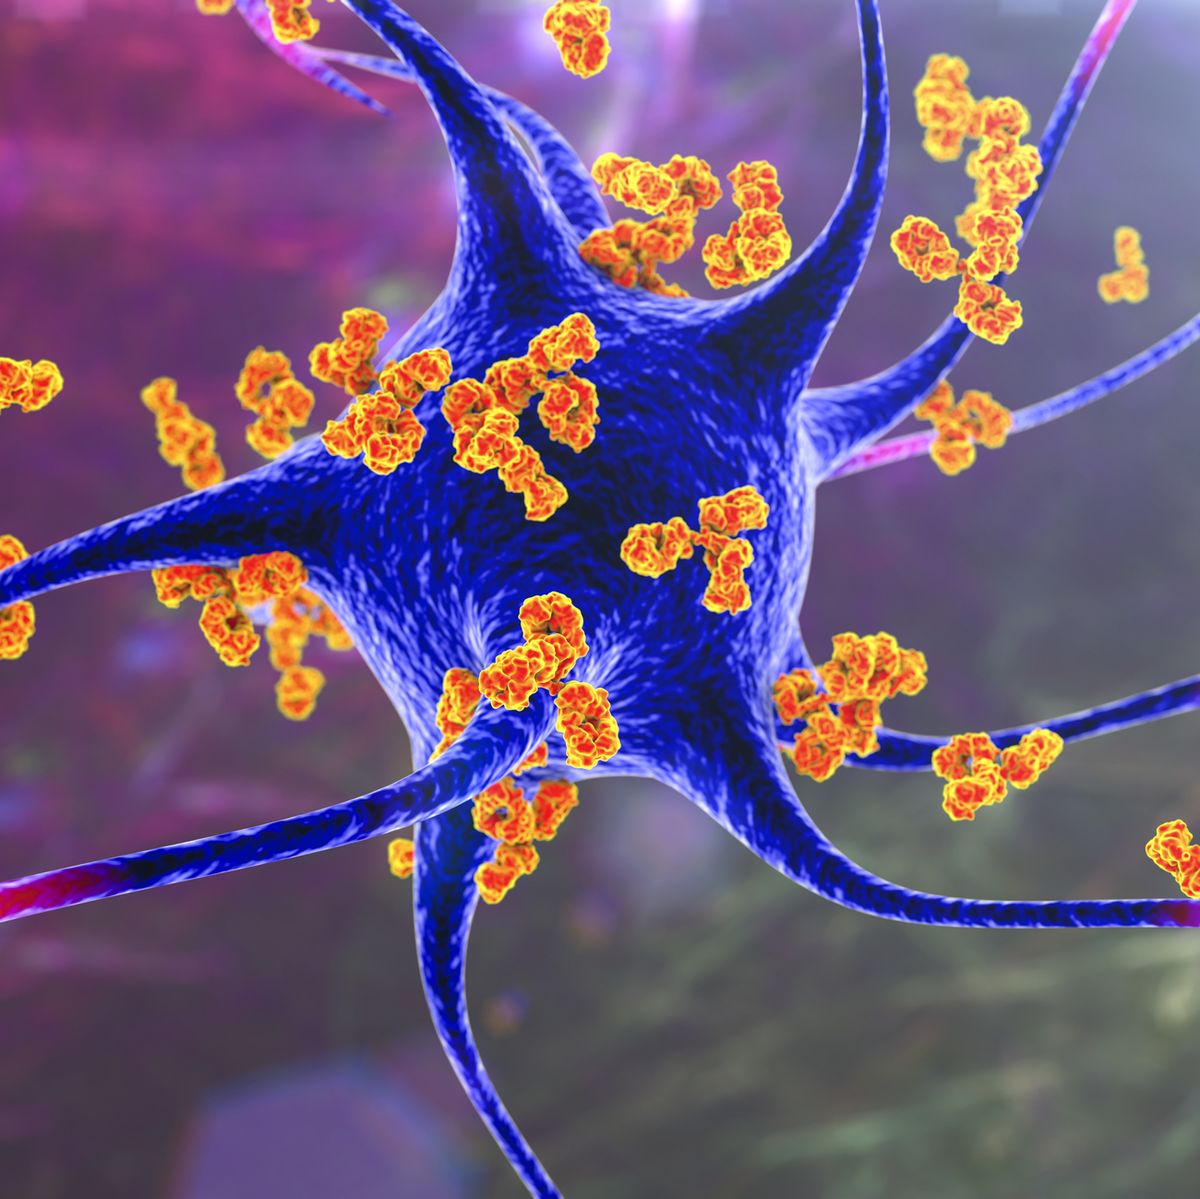 antibodies attacking neurons, conceptual illustration